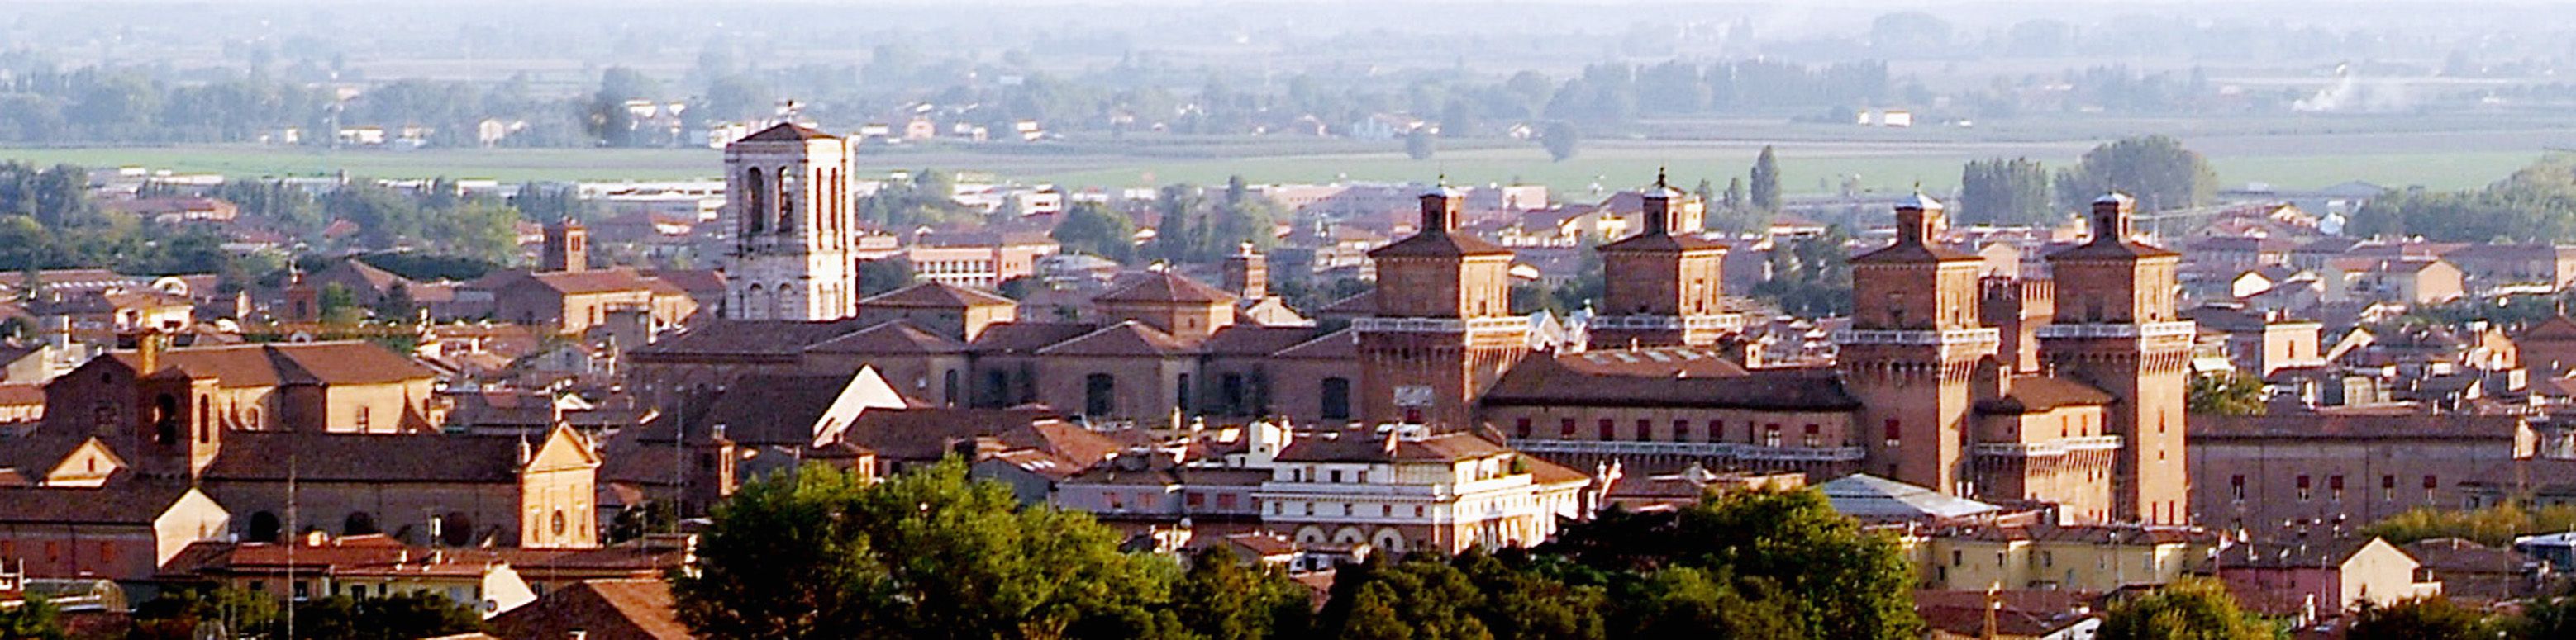 Castello Estense. Veduta aerea - baraldi